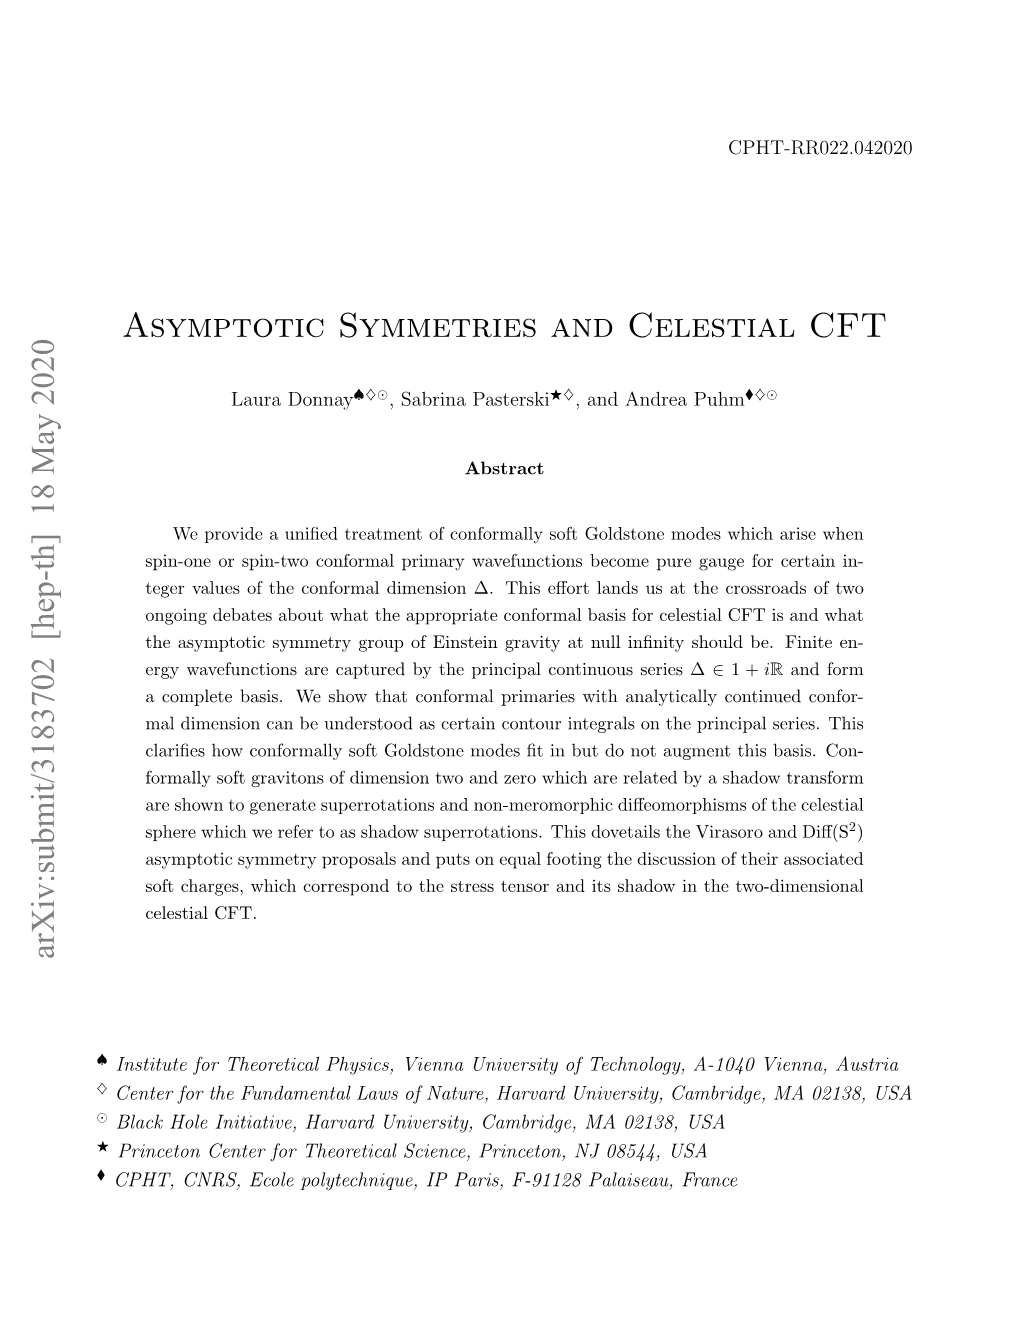 Asymptotic Symmetries and Celestial CFT Arxiv:Submit/3183702